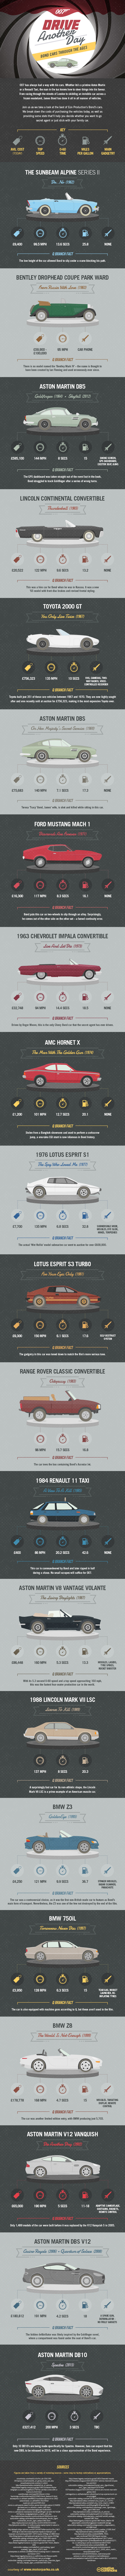 Bond car infographic